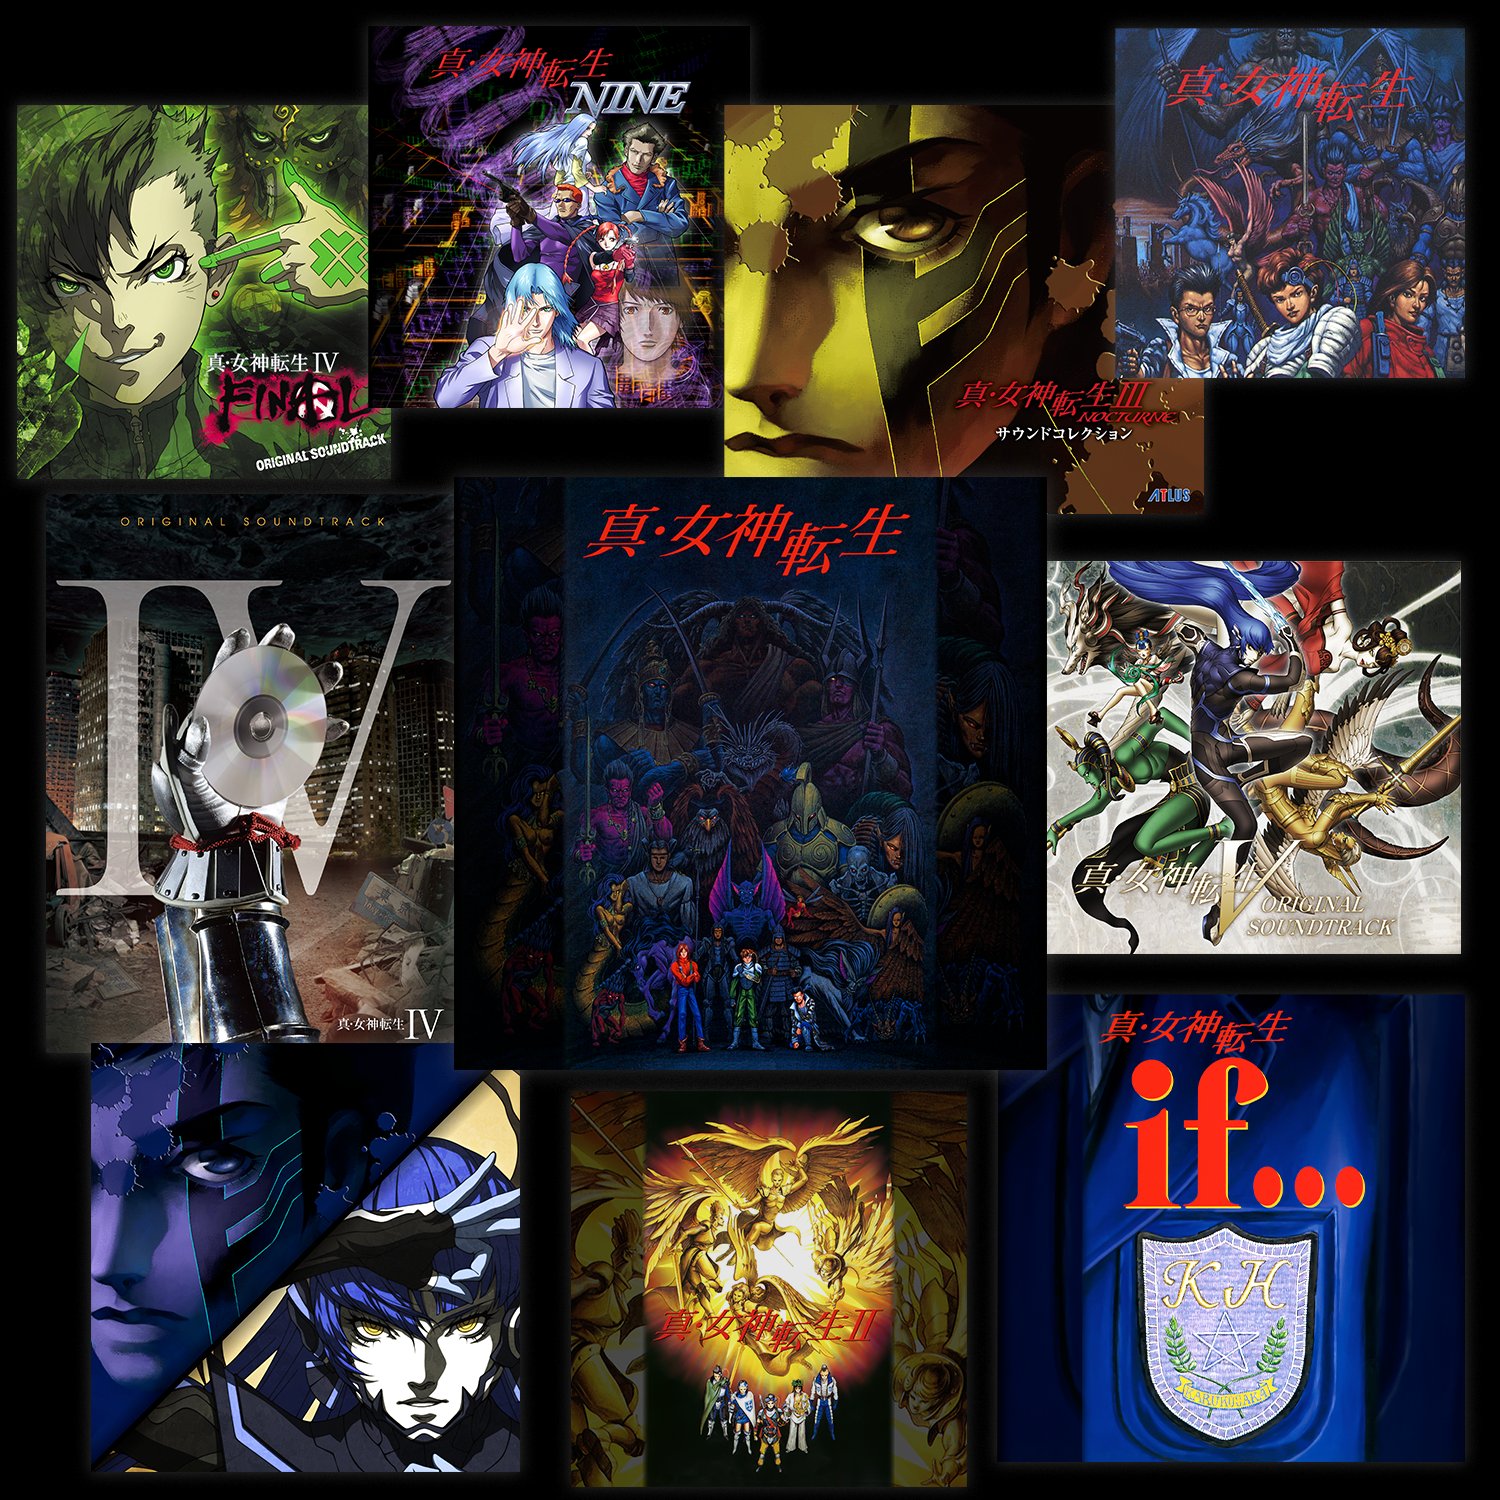 Shin Megami Tensei V Original Soundtrack (Various Artists)